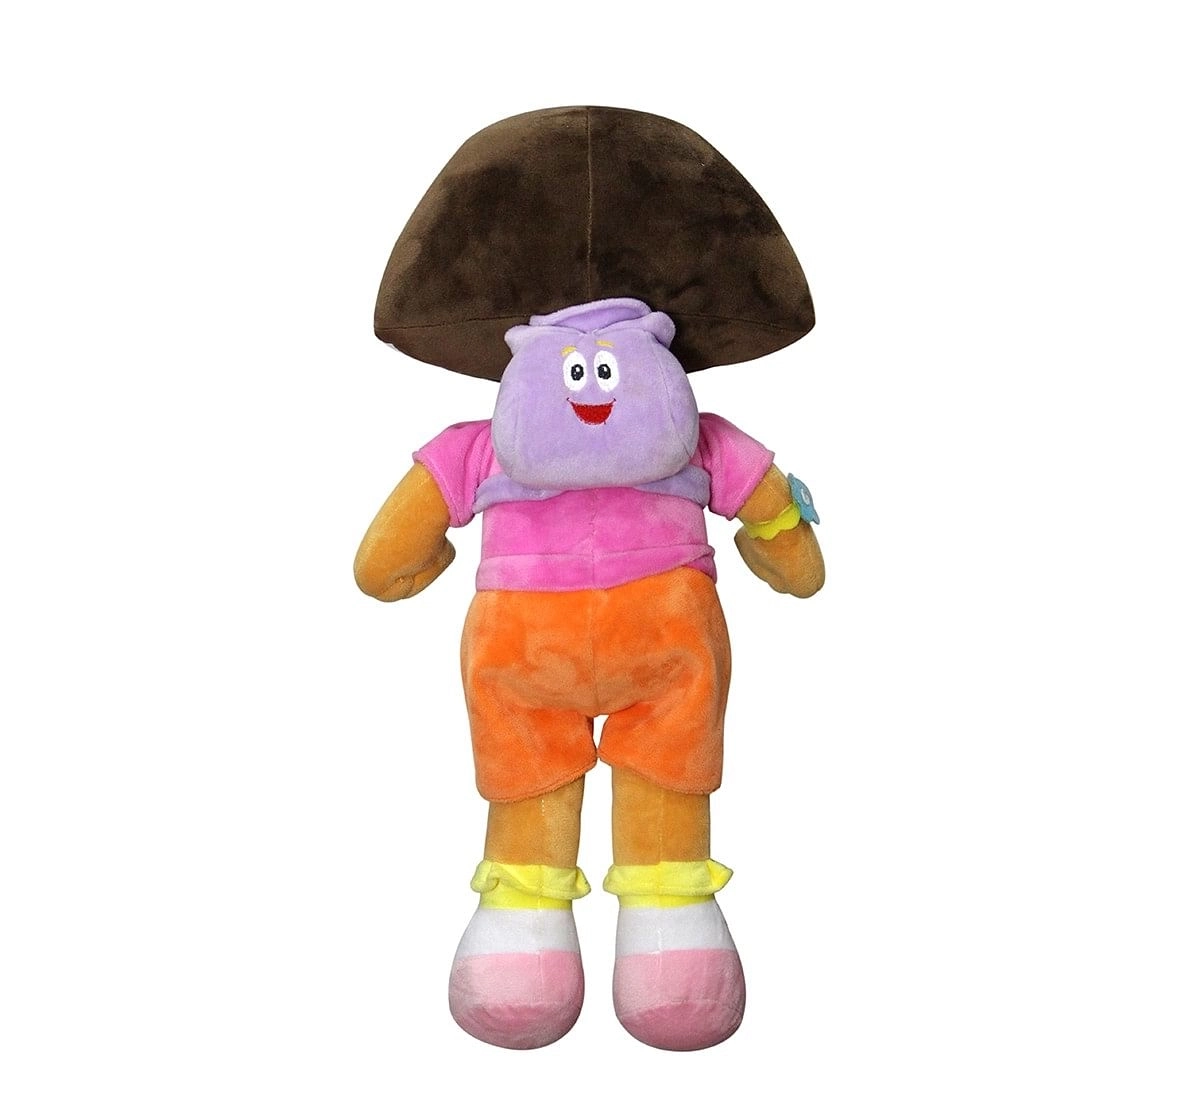 Dora The Explorer Xl Back Pack Plush Accessories for Kids age 12M+ - 76.2 Cm 